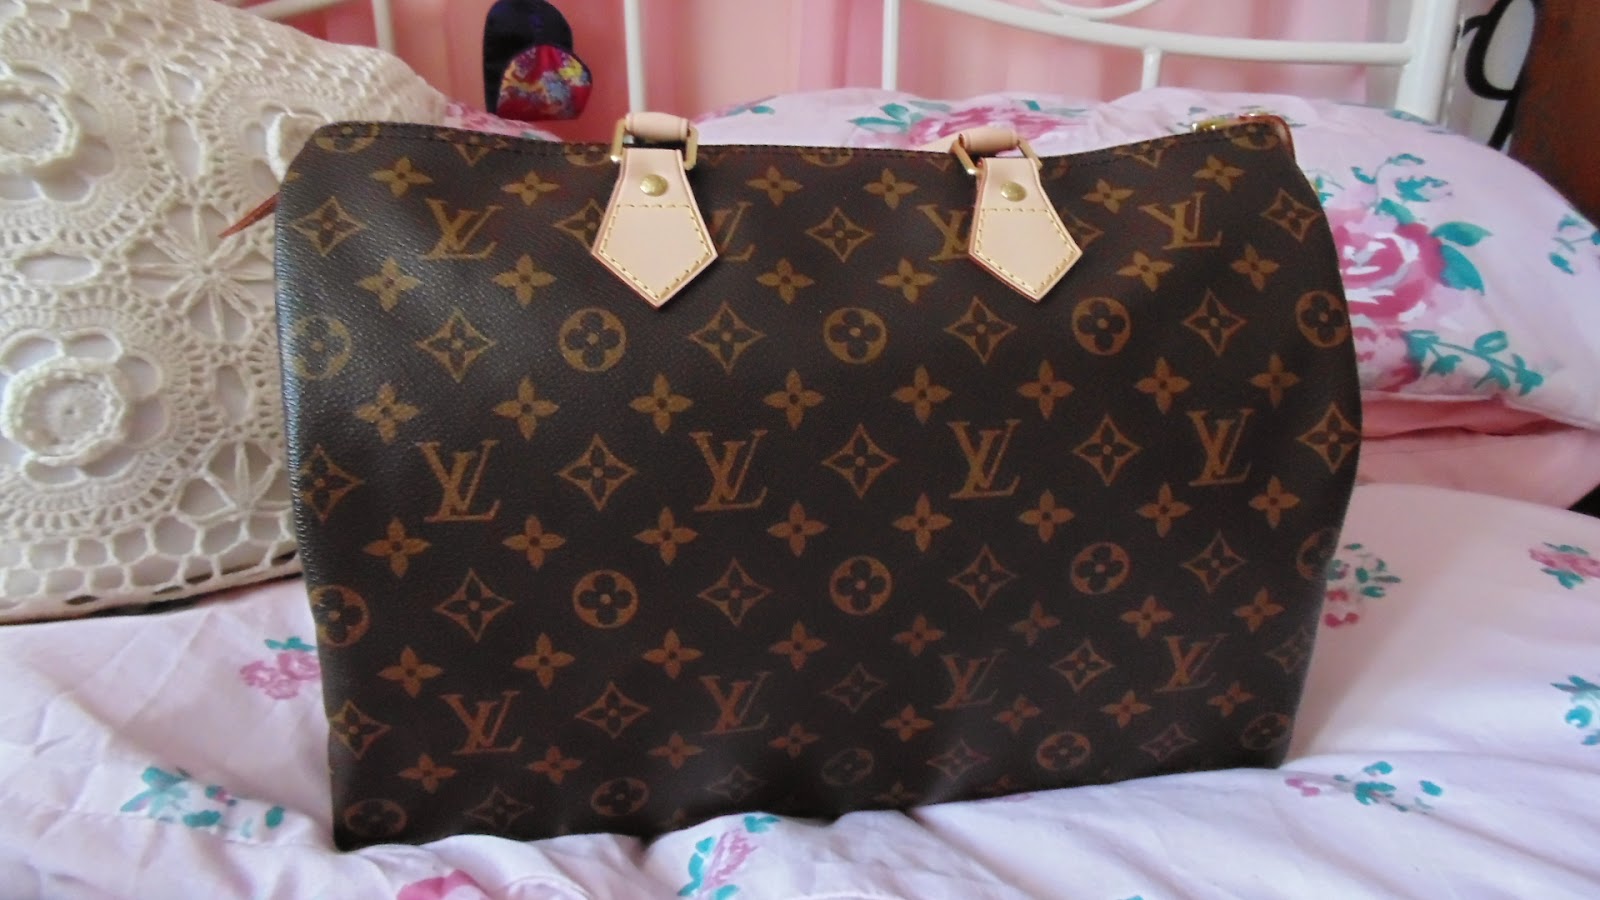 Louis Vuitton Speedy 30 Damier Hand Bag reviews in Handbags